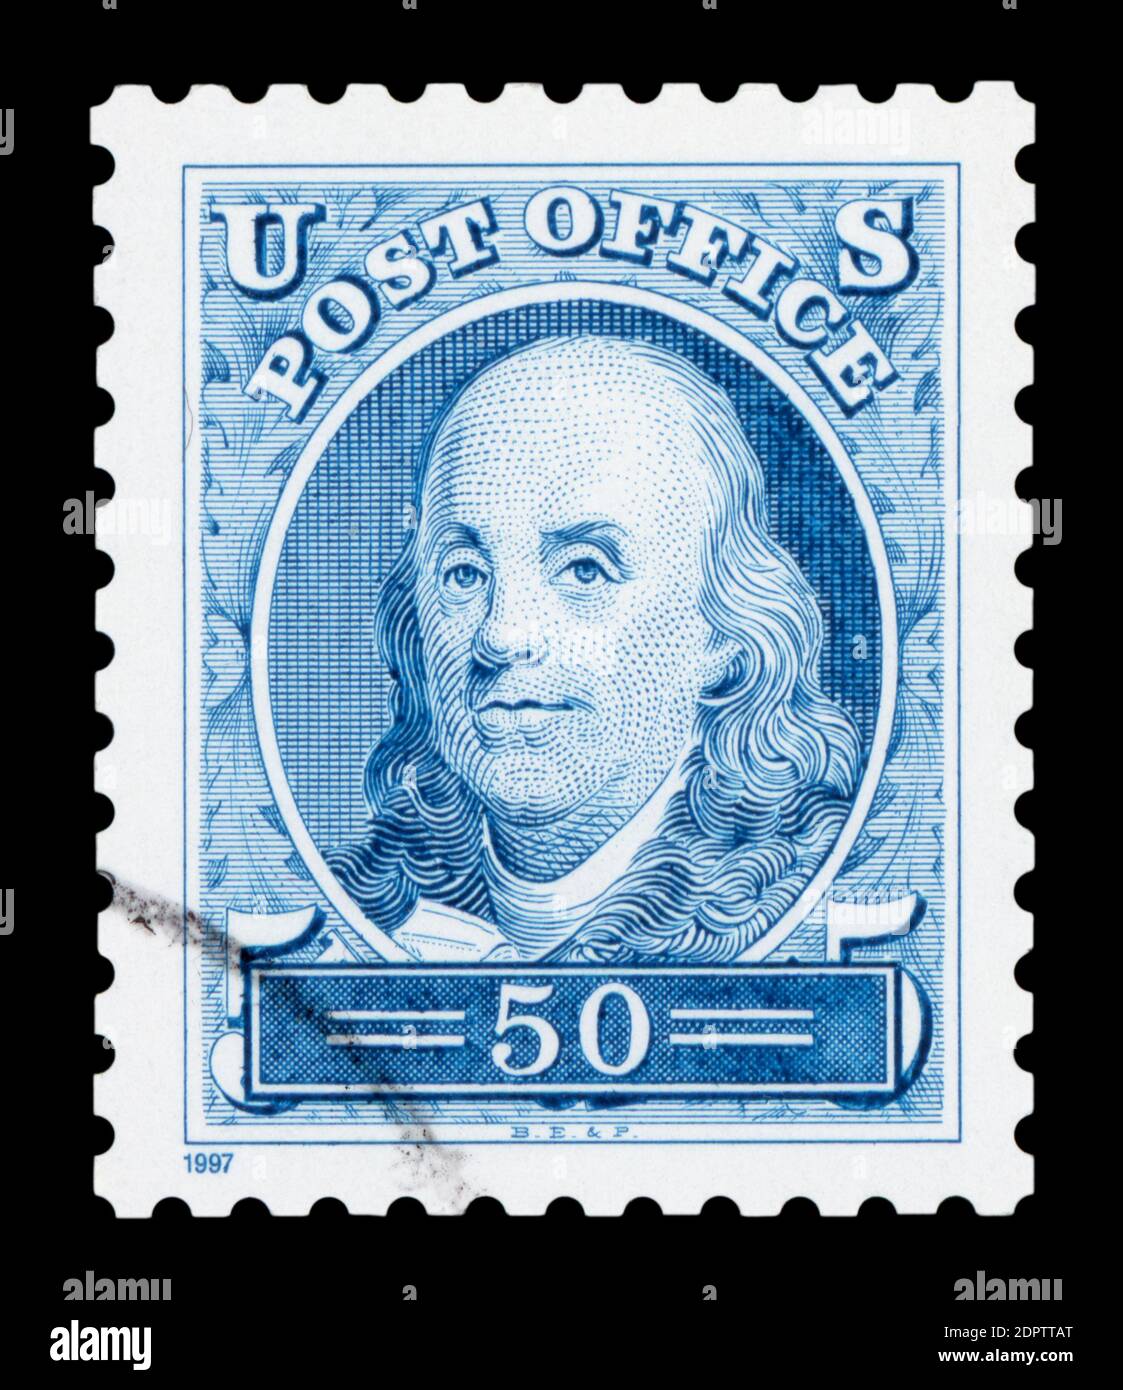 UNITED STATES OF AMERICA - CIRCA 1997: A stamp printed in the United States of America shows Benjamin Franklin, circa 1997. Stock Photo